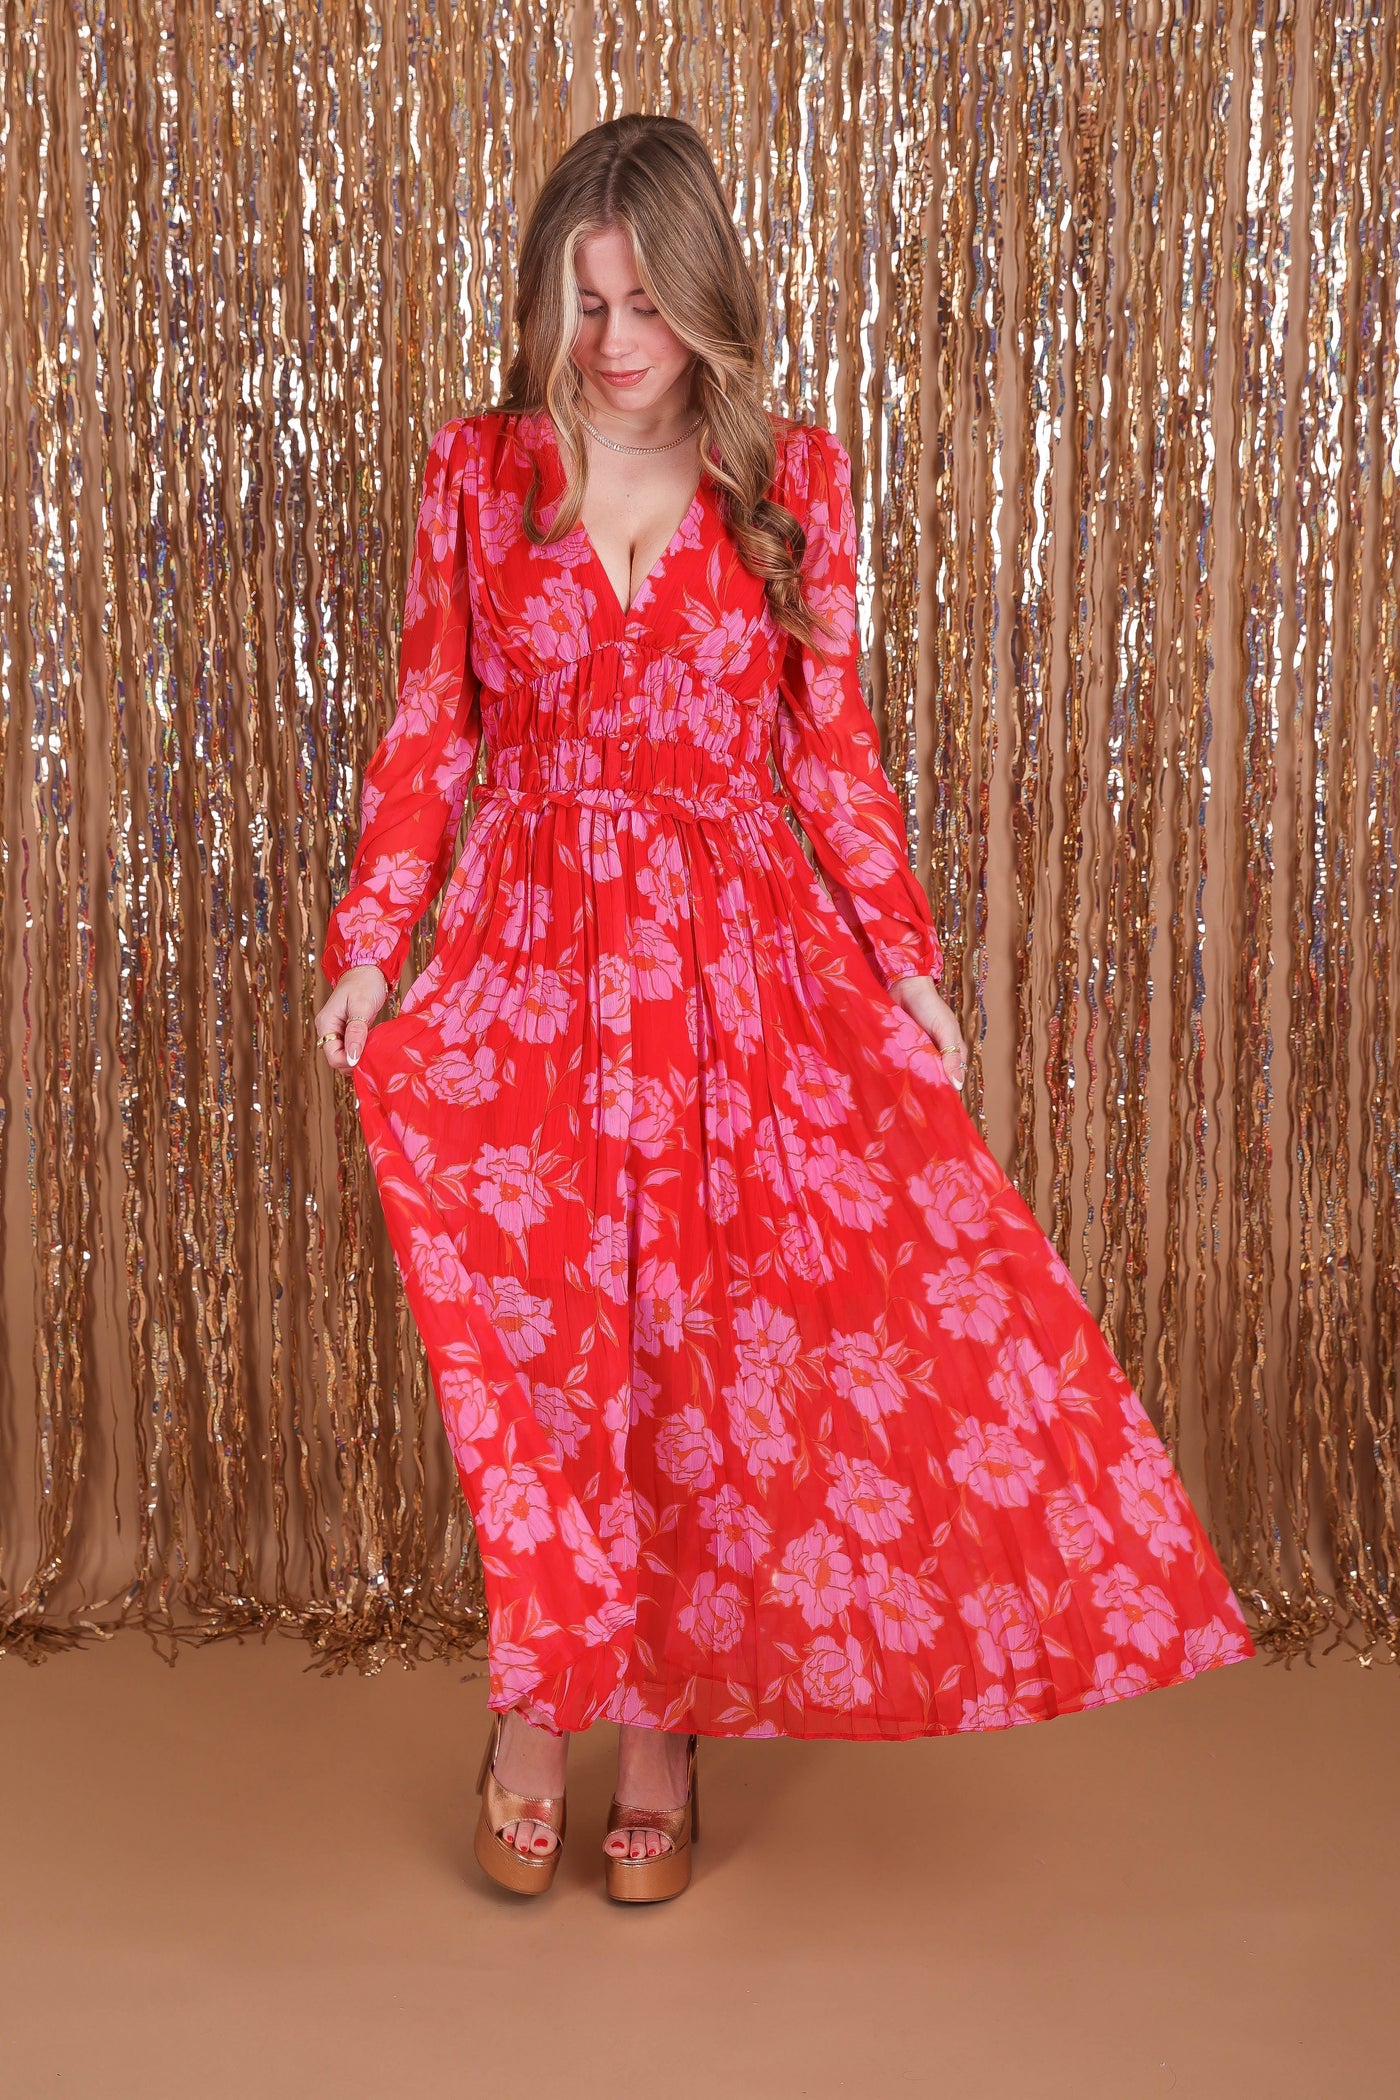 Women's Floral Chiffon Maxi Dress- Pink and Red Floral Maxi- Strut&Bolt Maxi Dress